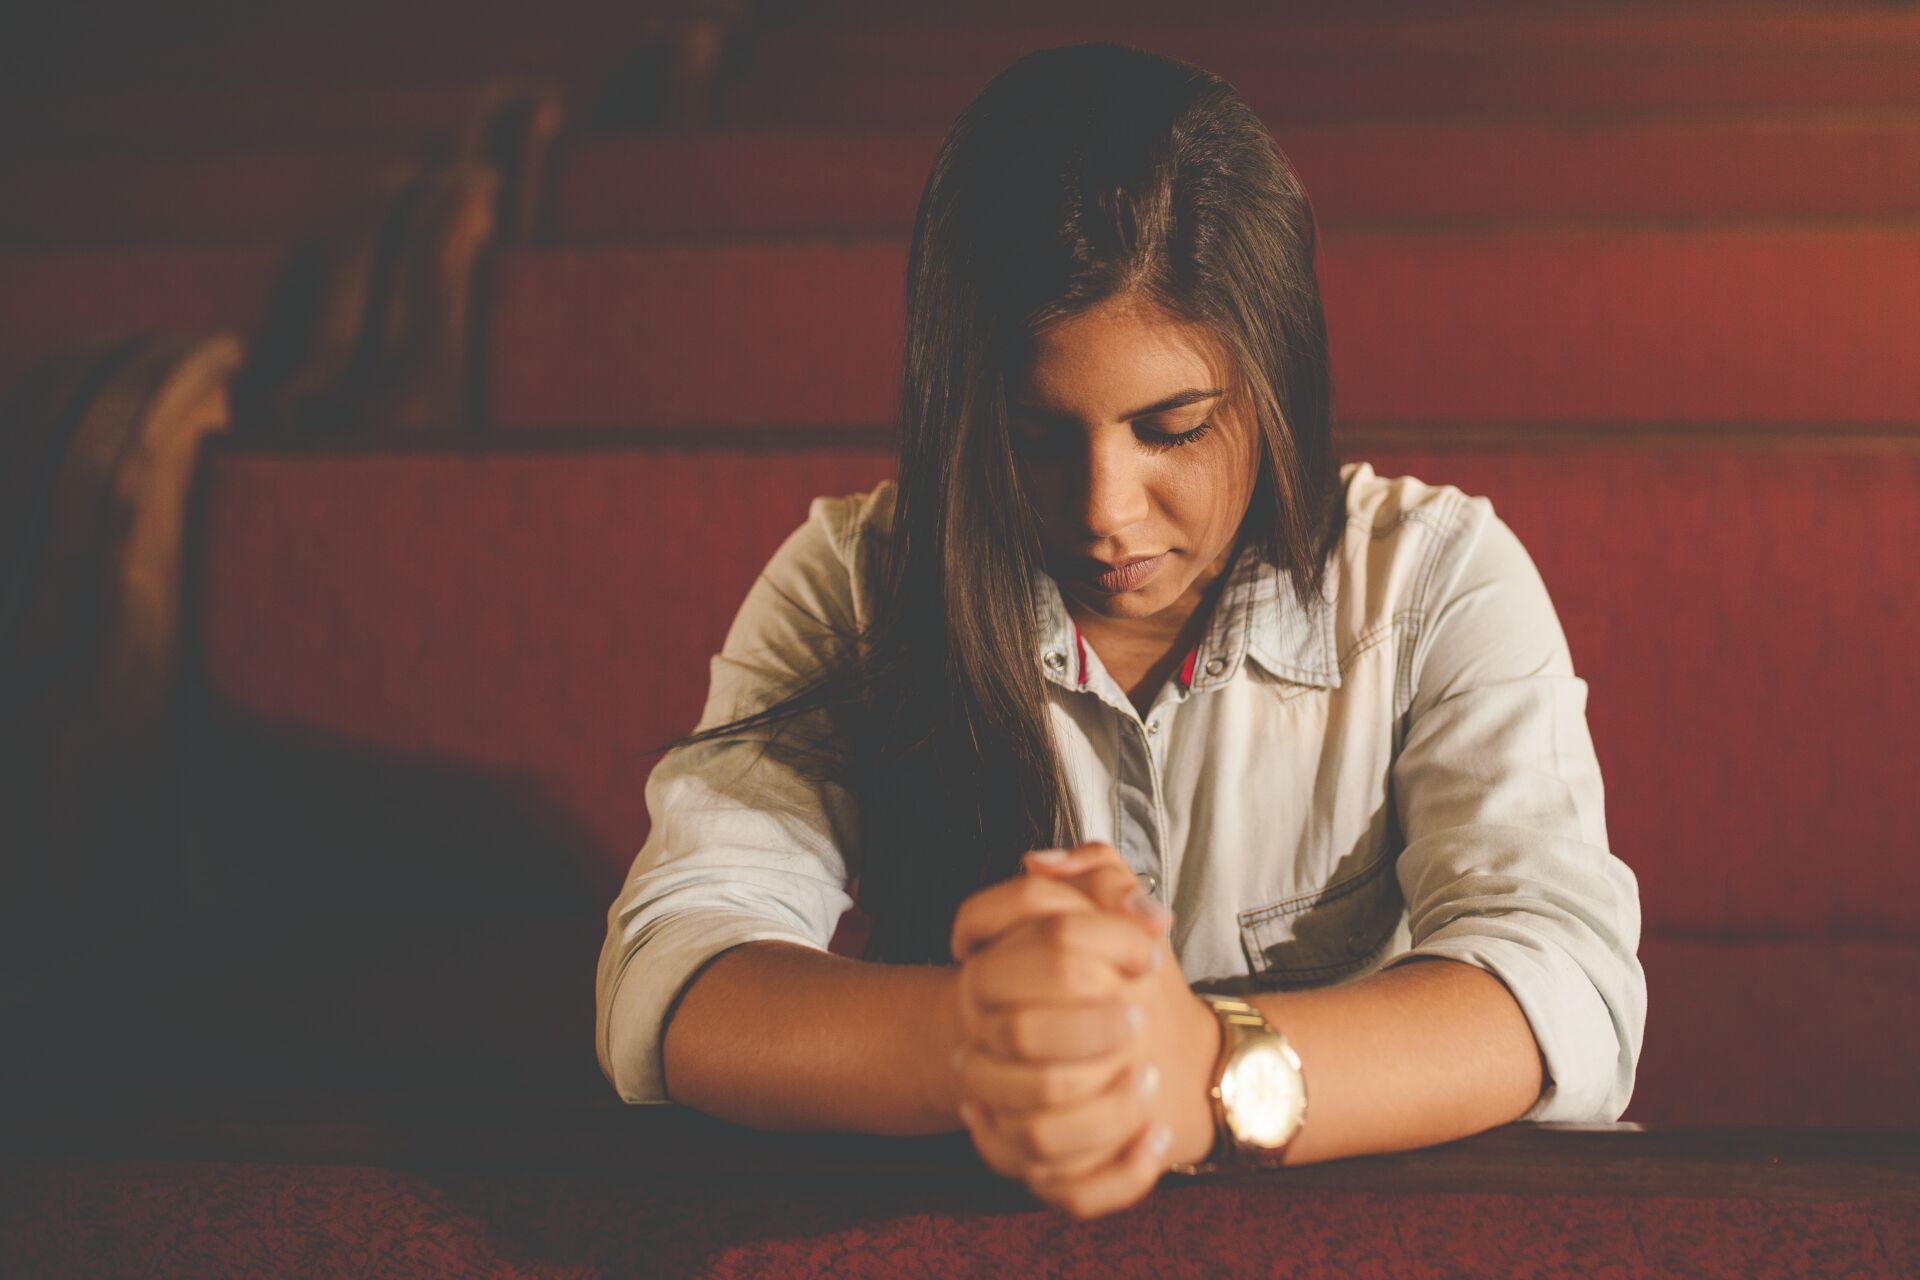 Why Do Christians Pray?